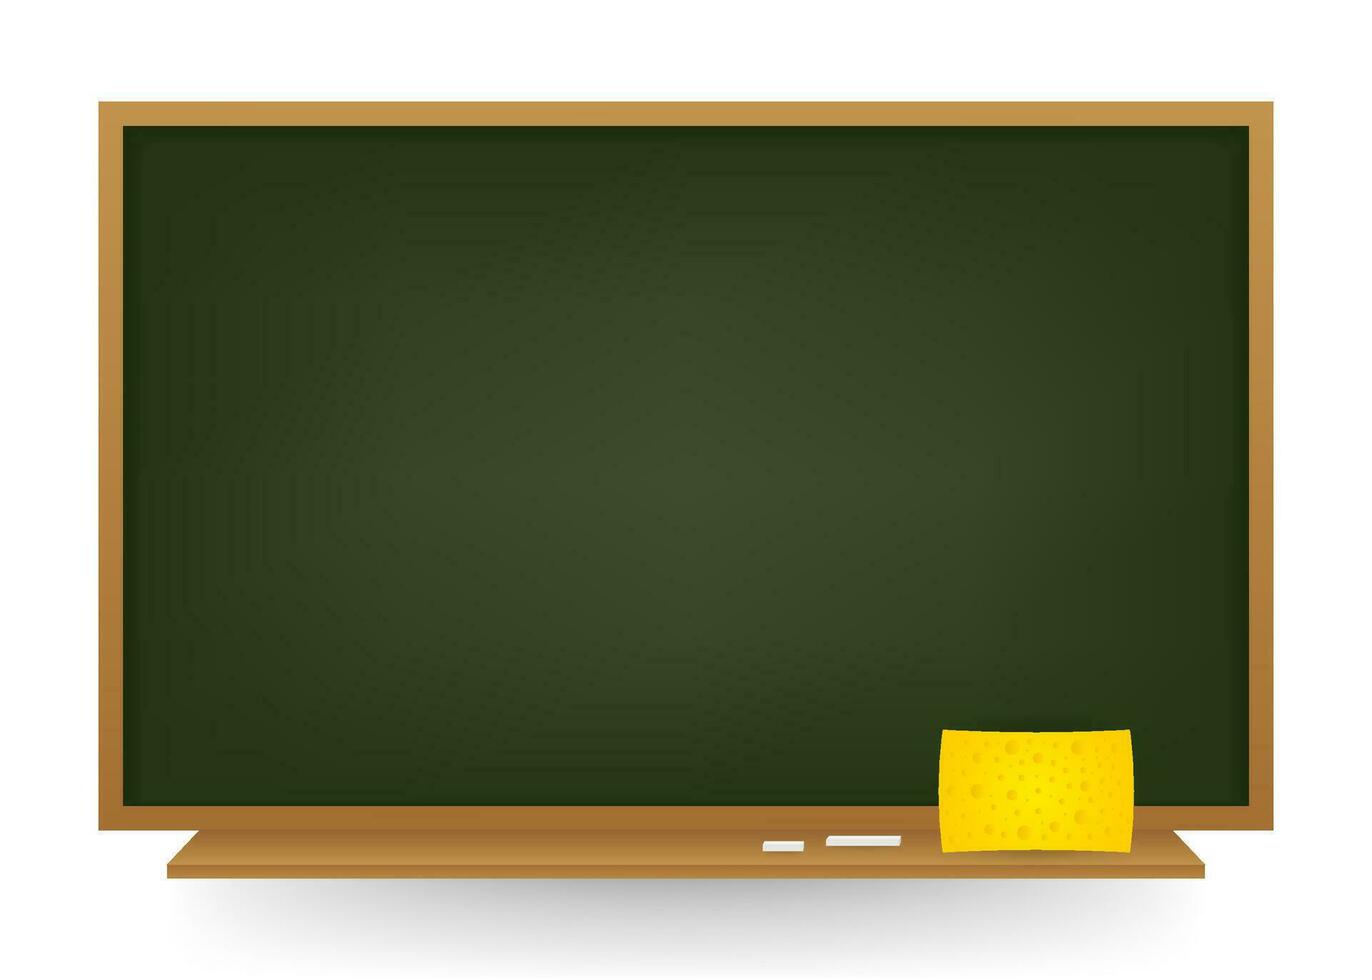 Empty Green school chalkboard background. Template for your design. Vector stock illustartion